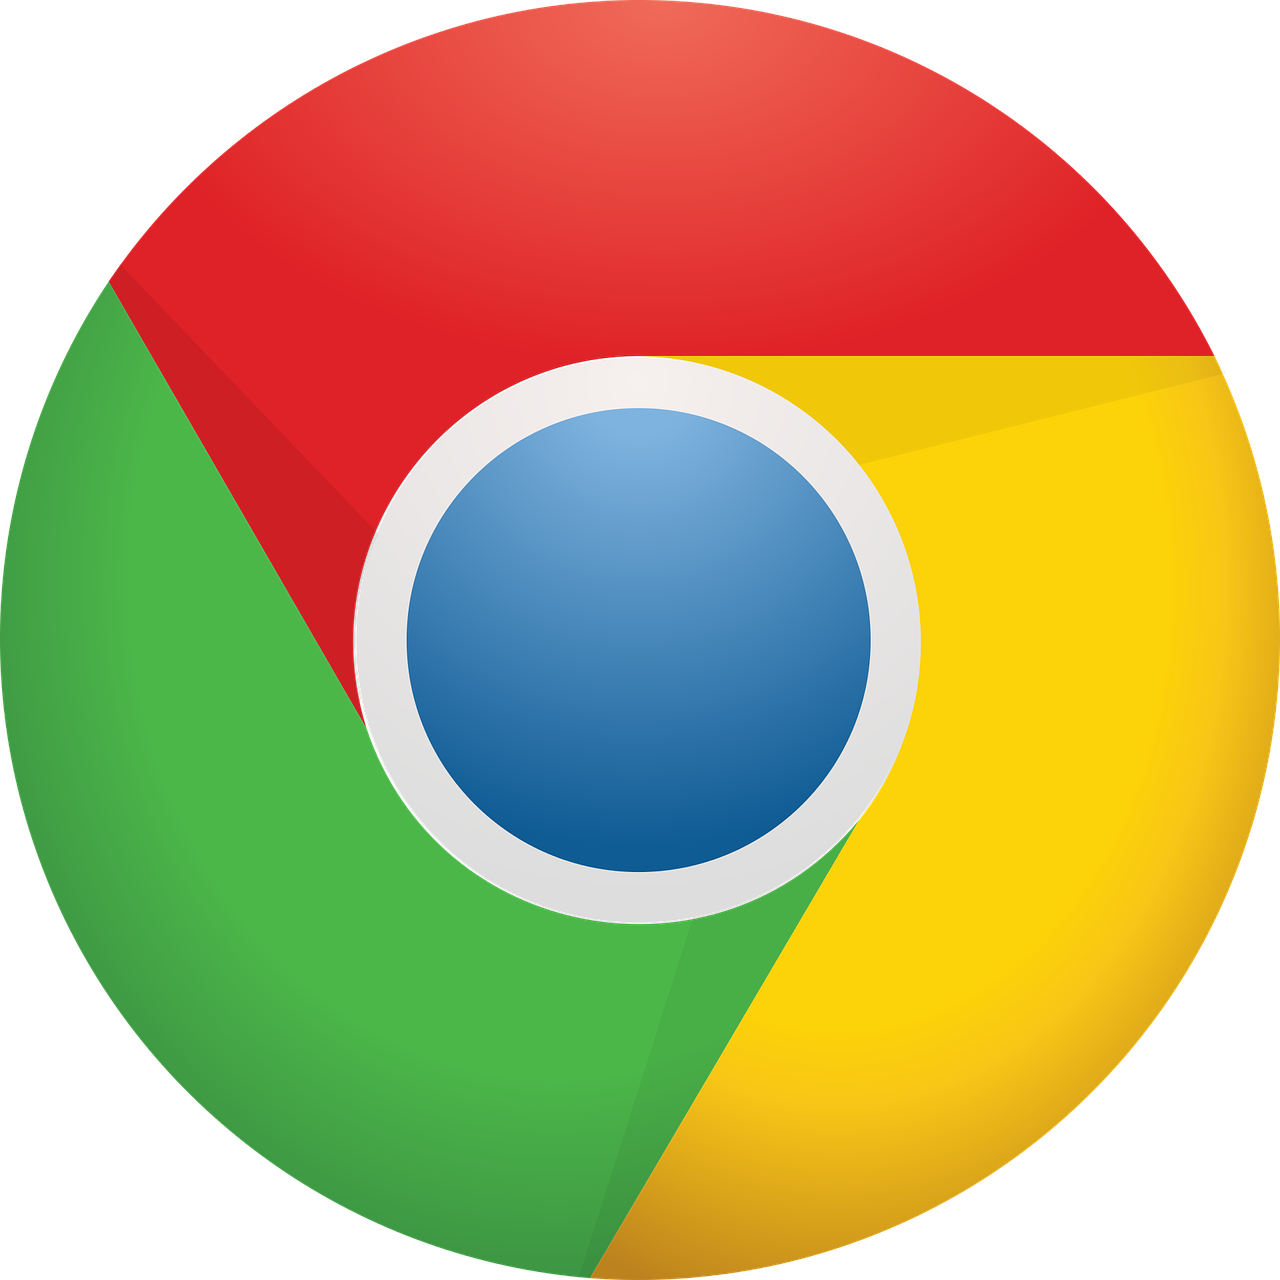 Chrome８６をリリースされ、パスワードセキュリティチェック機能を追加。